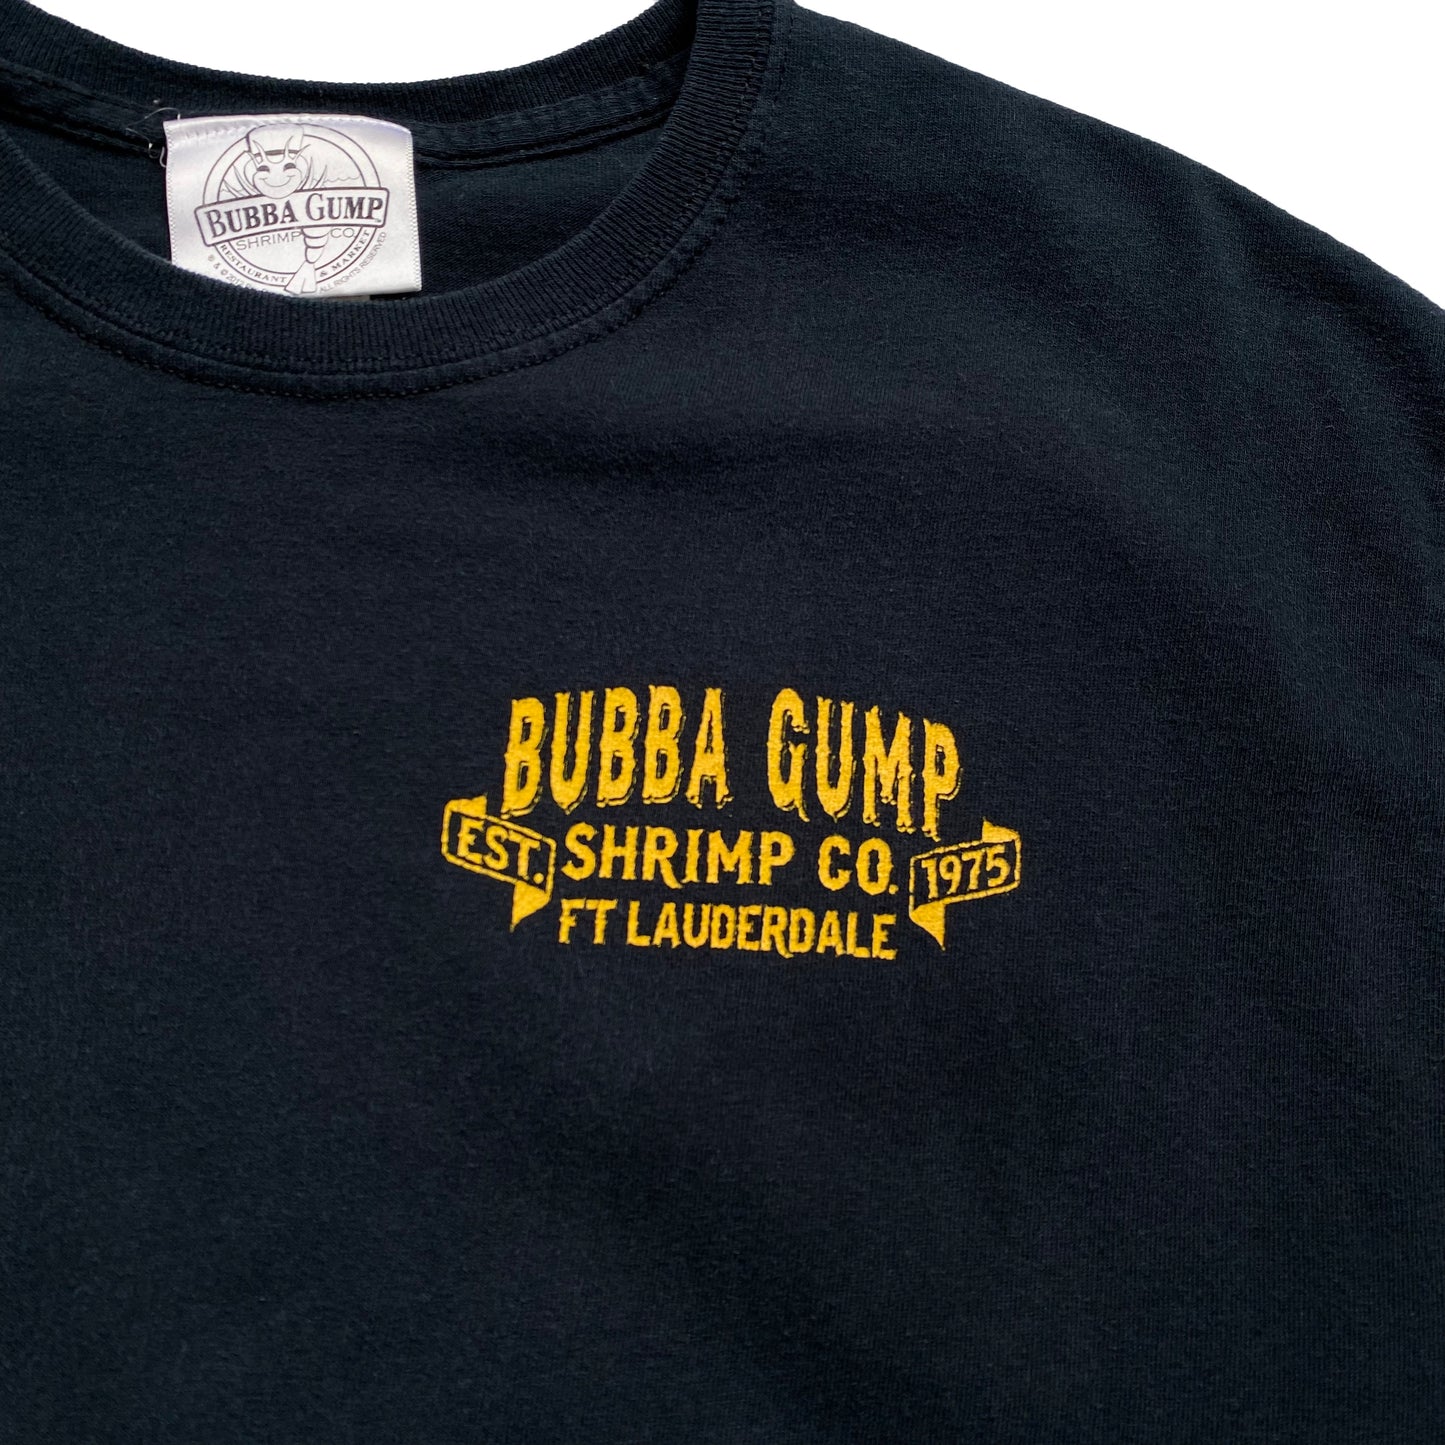 10's "BUBBA GUMP SHRIMP CO." T-SHIRT